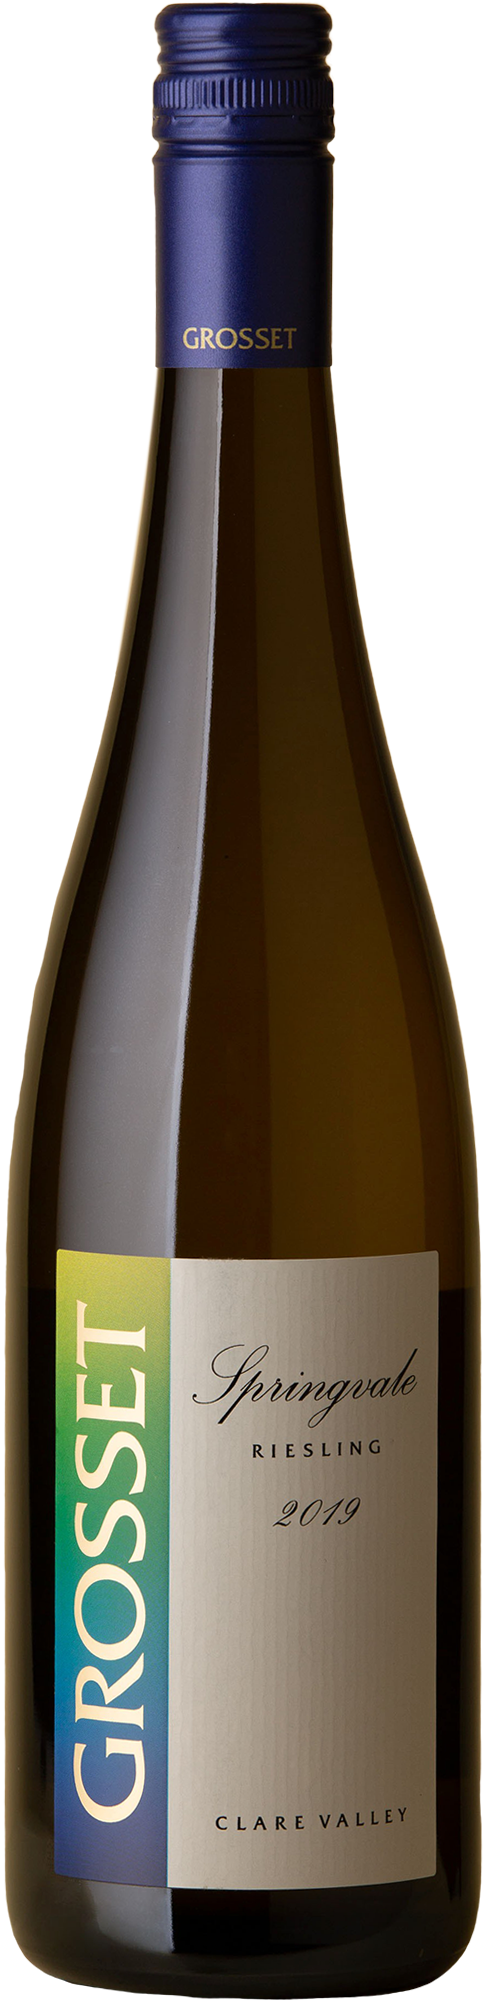 Grosset - Springvale Riesling 2019 White Wine